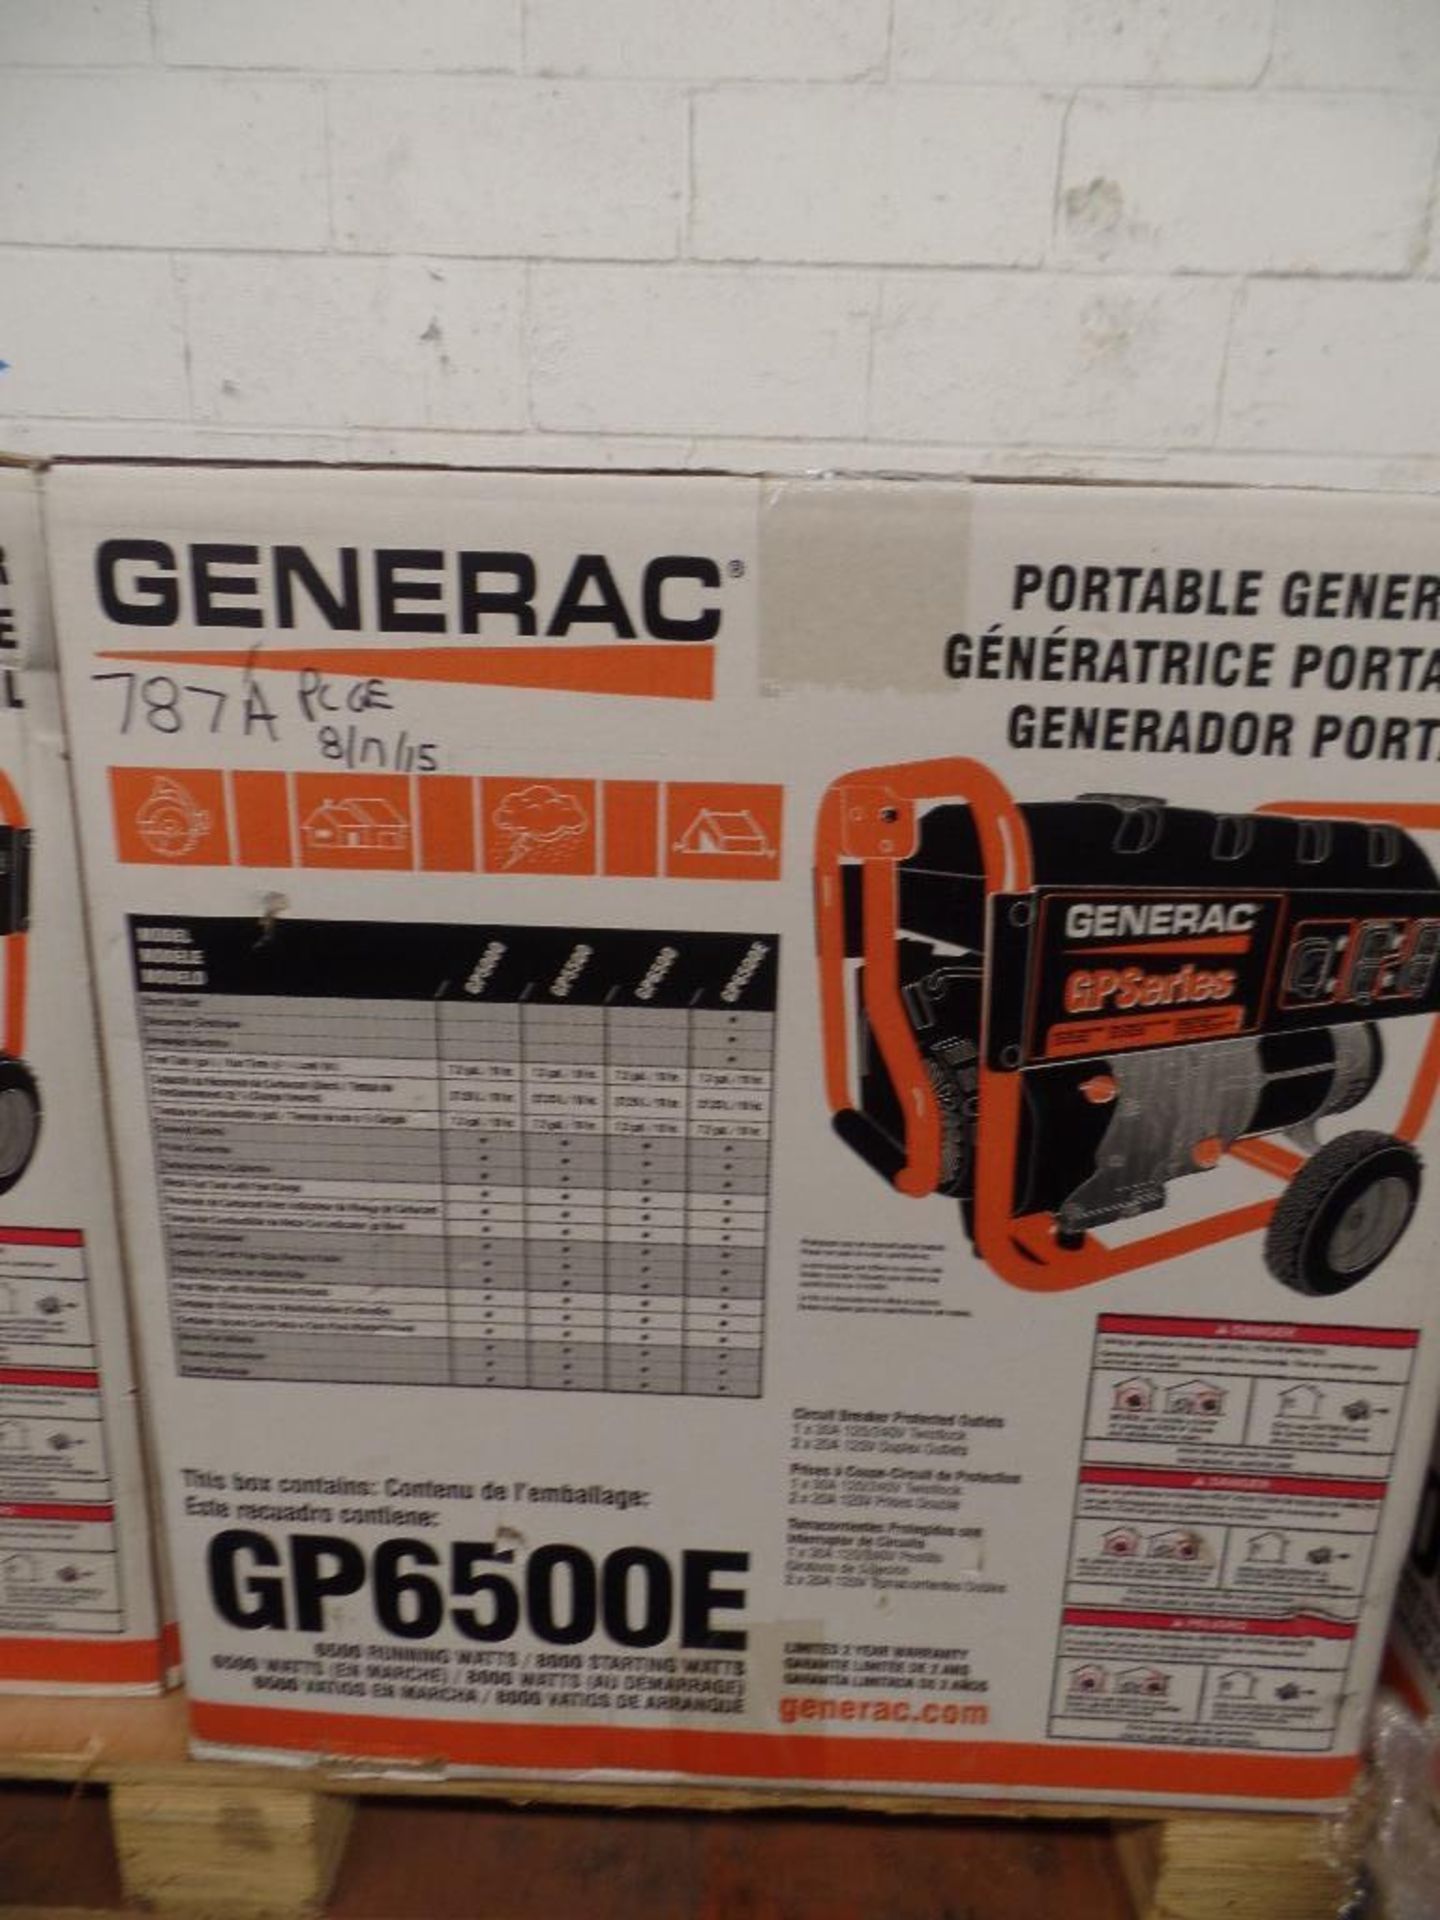 NEW IN BOX Generac Generator GP6500E